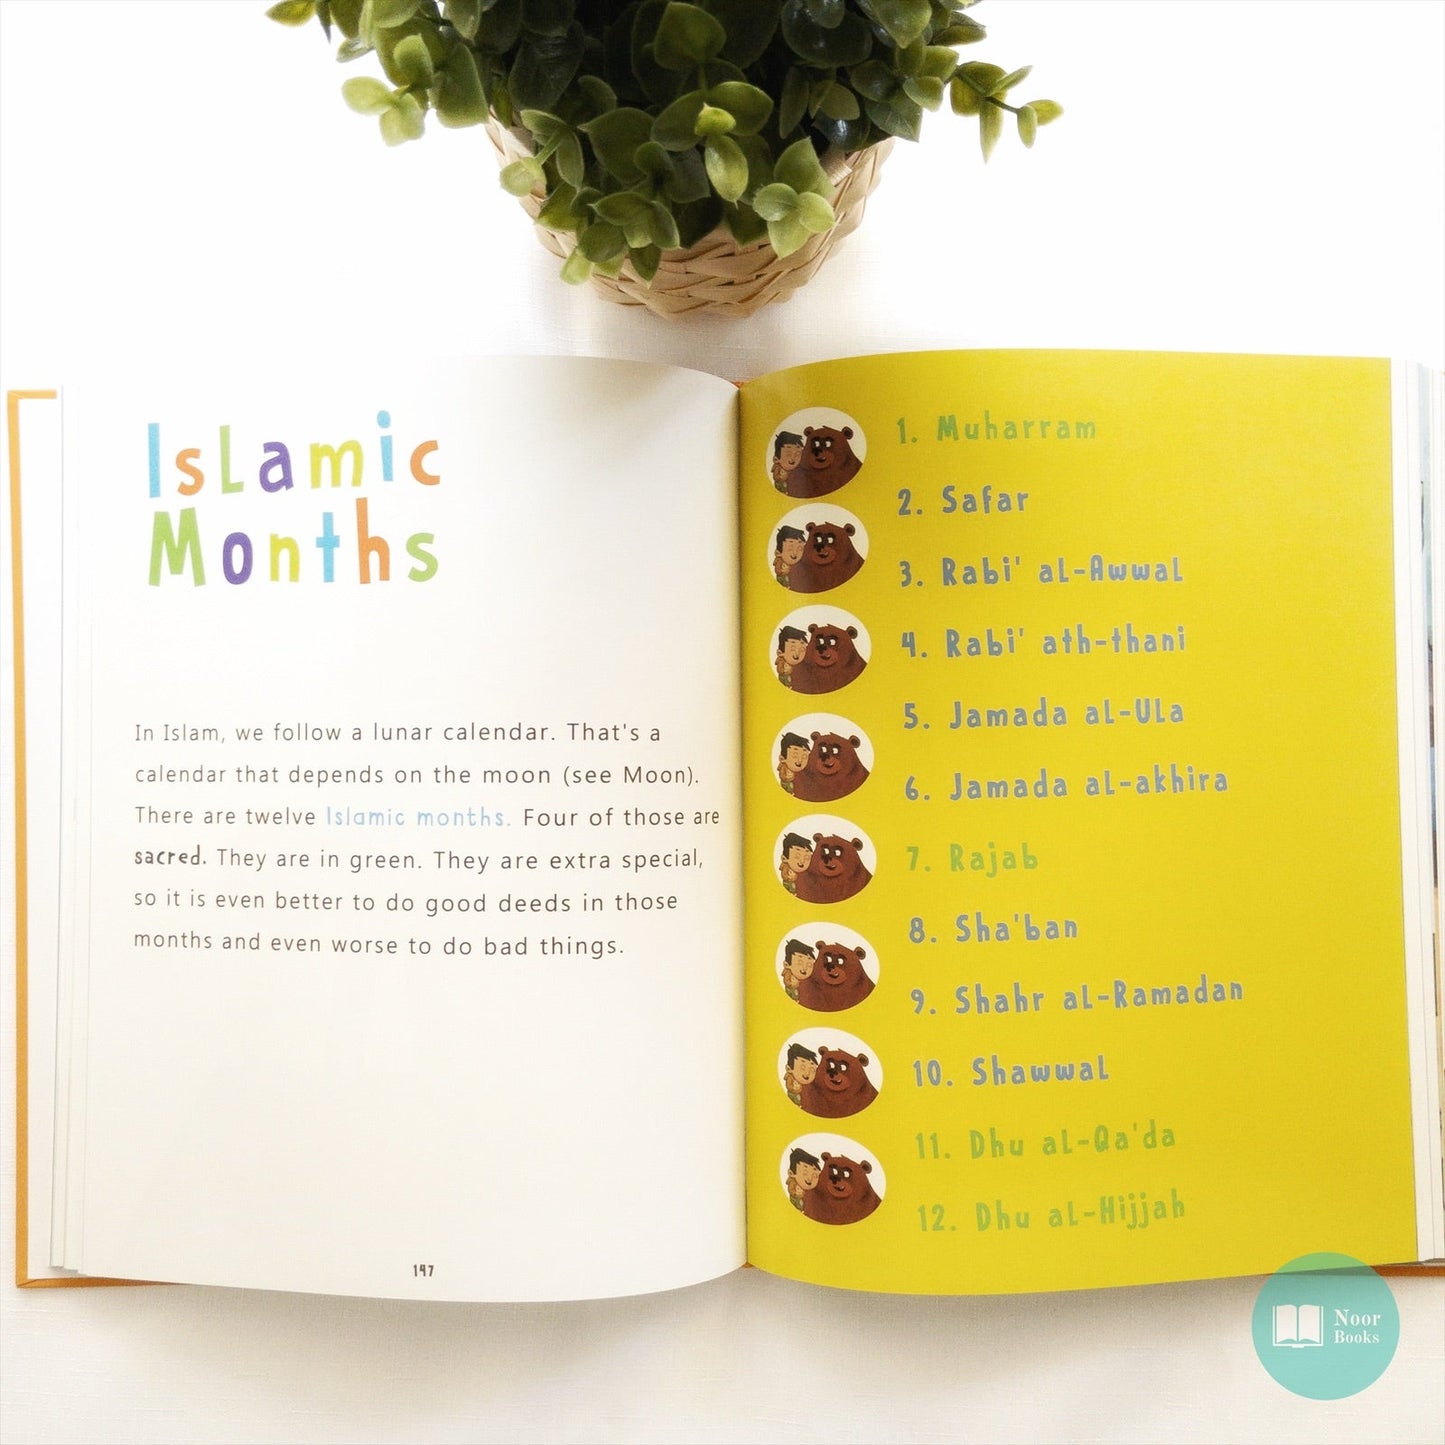 Migo & Ali: A-Z of Islam - Noor Books